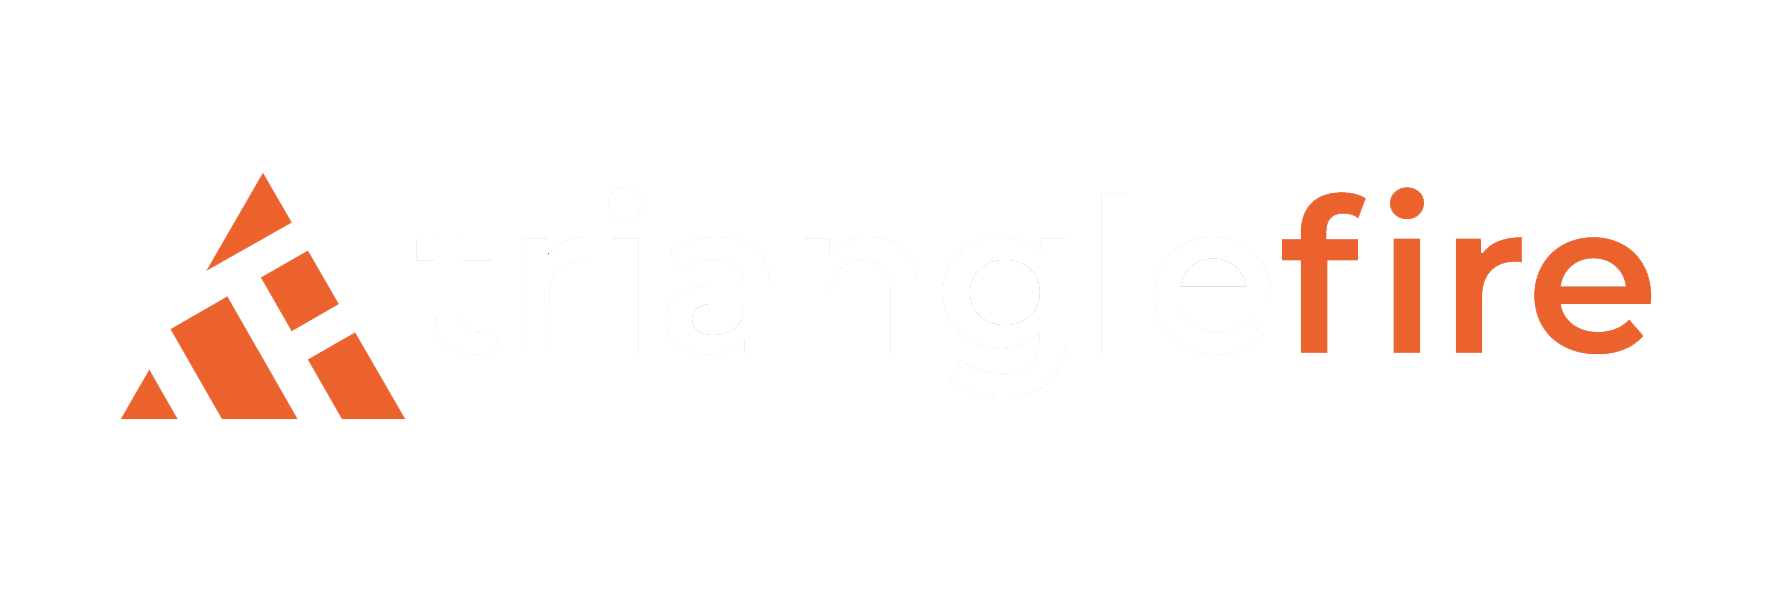 trianglefire logo - triangle orange logo with the words 'triangle fire' following